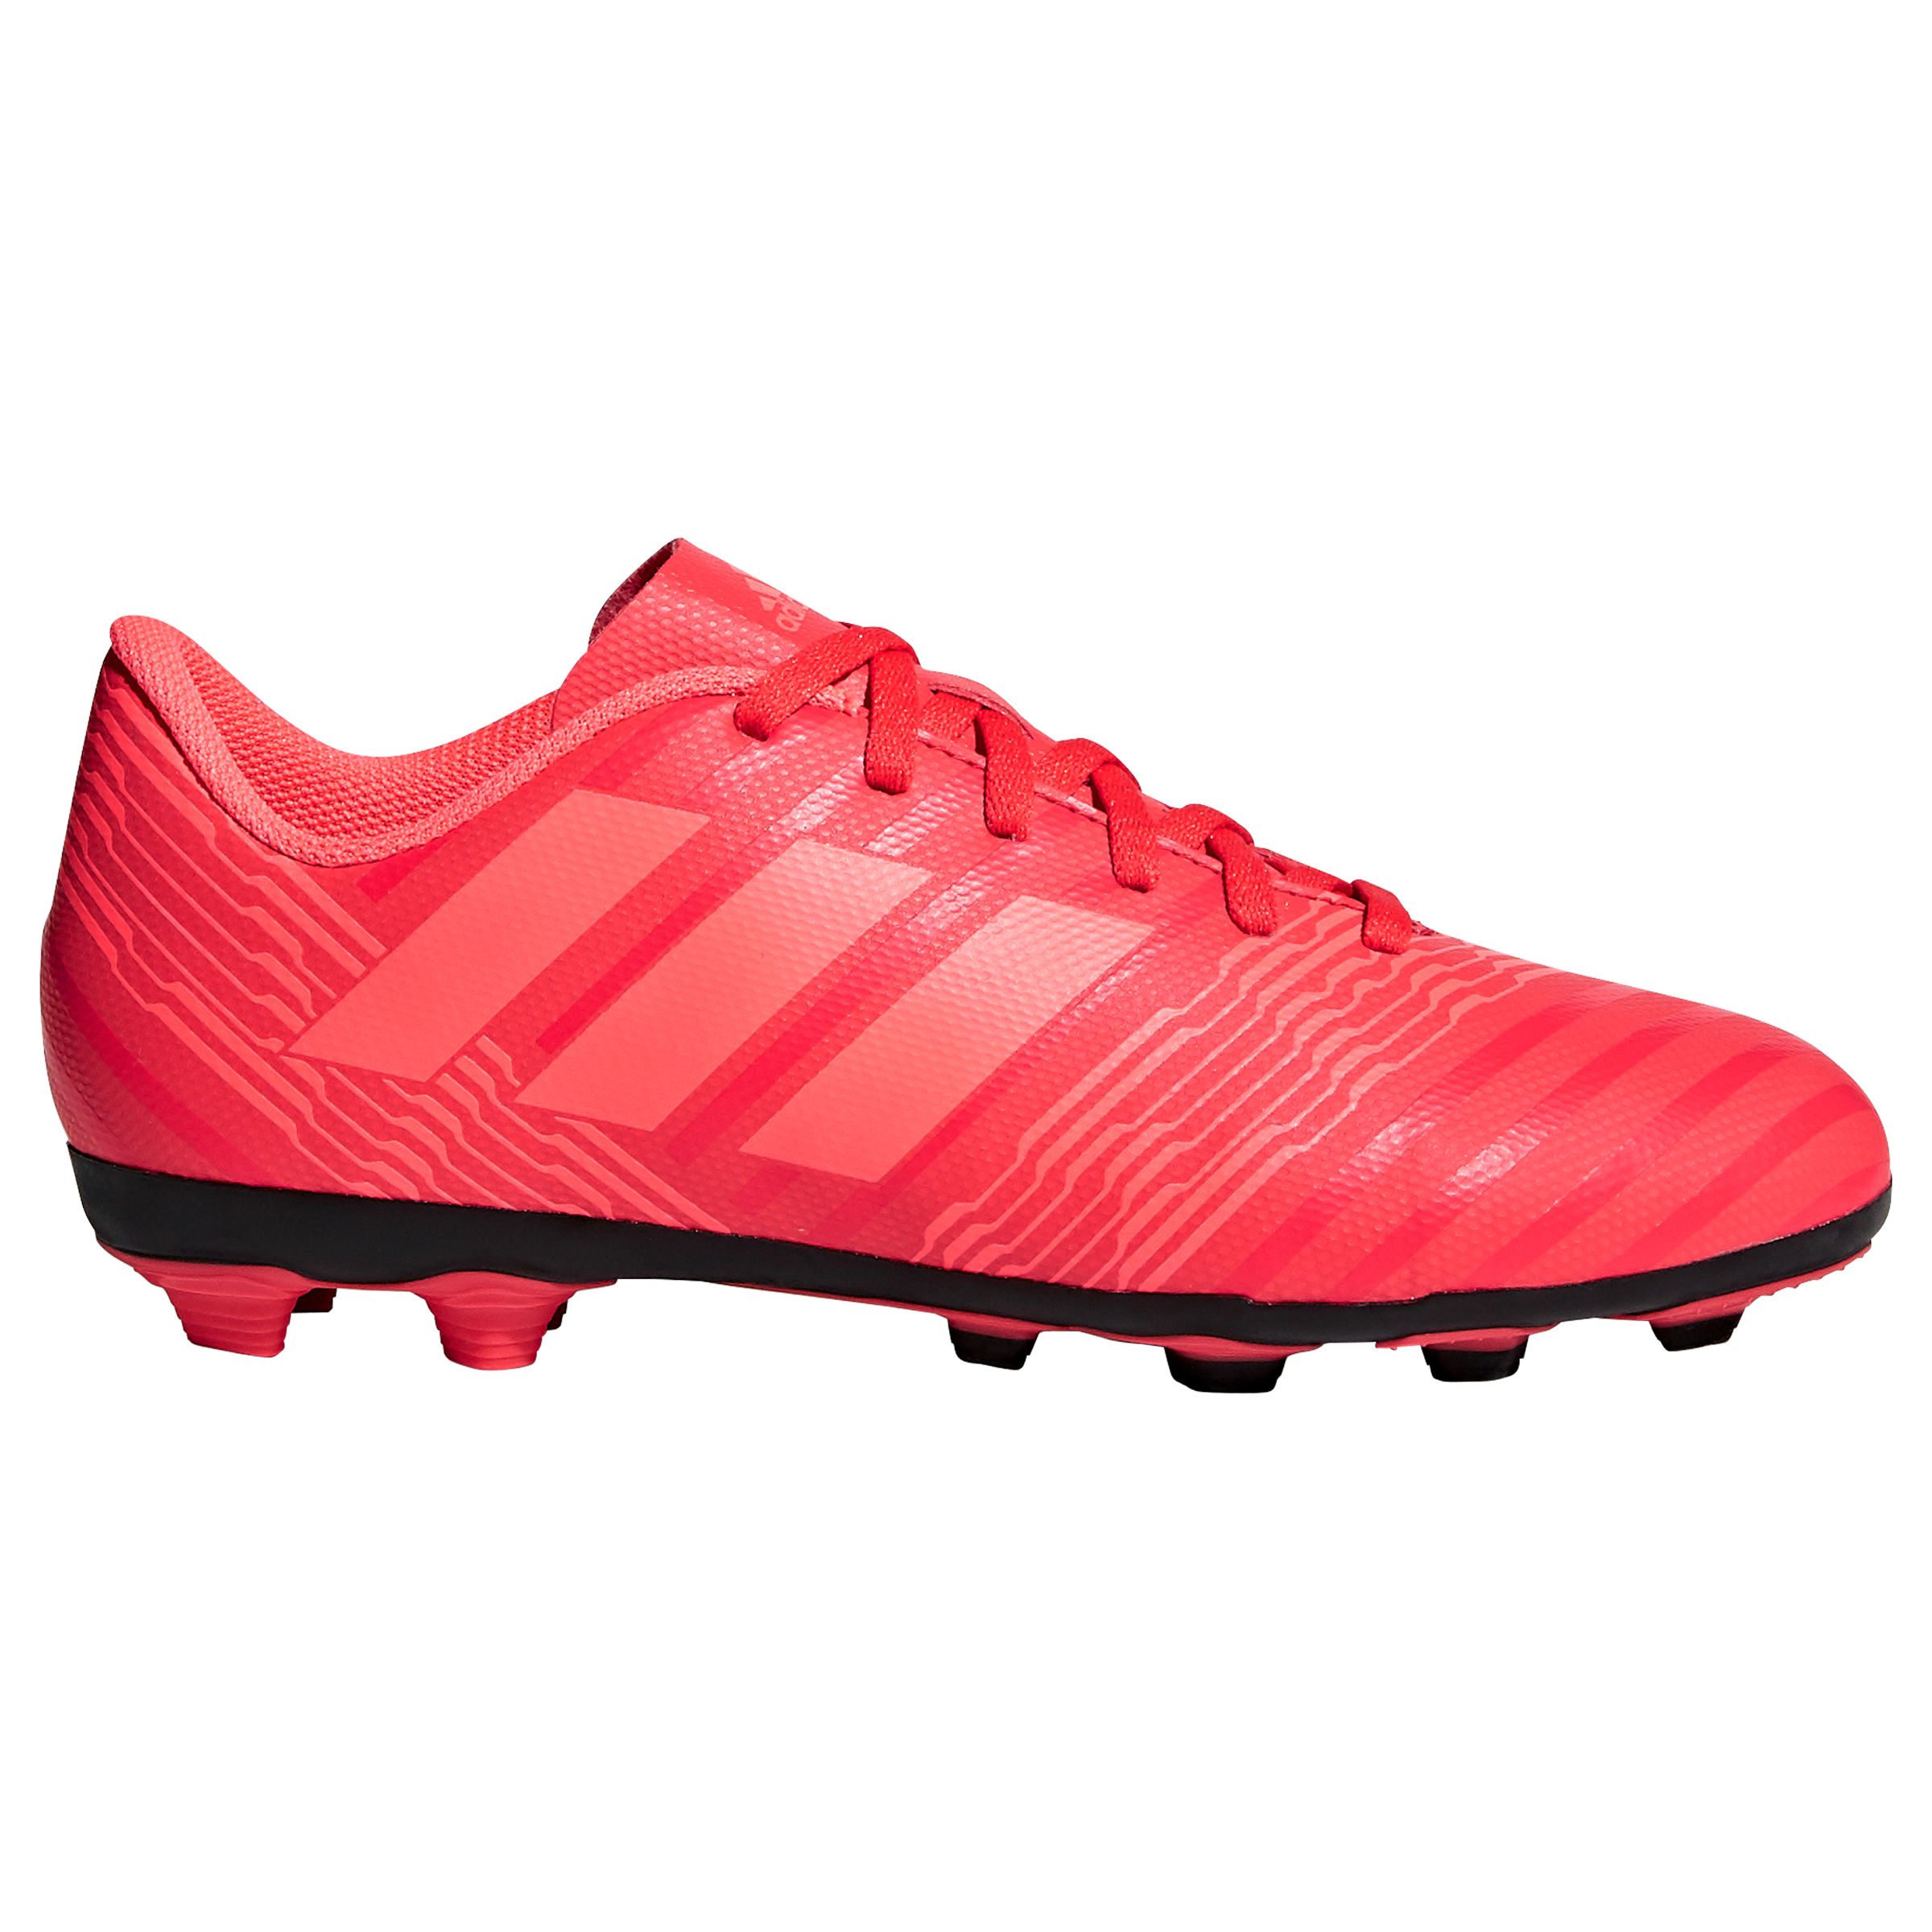 adidas football boots size 1.5